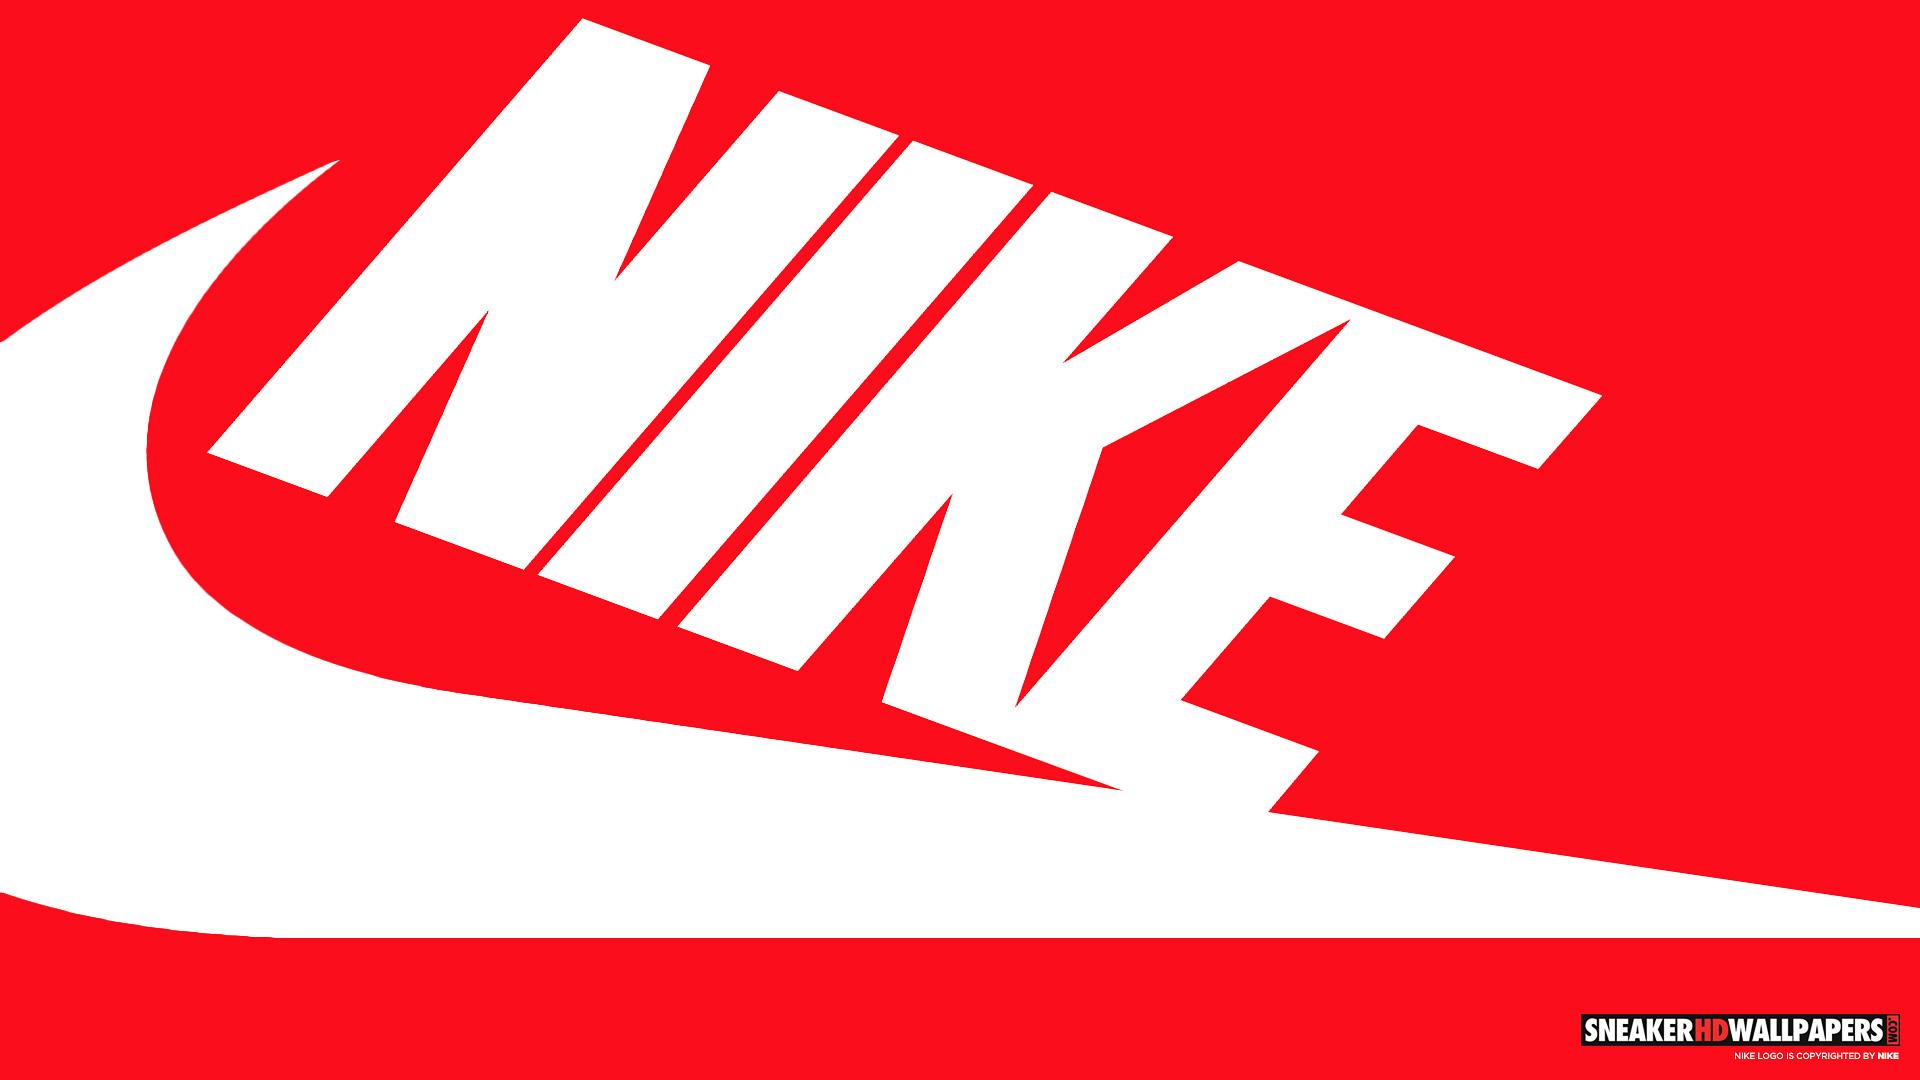 Nike Plus Logo - SneakerHDWallpapers.com – Your favorite sneakers in HD and mobile ...